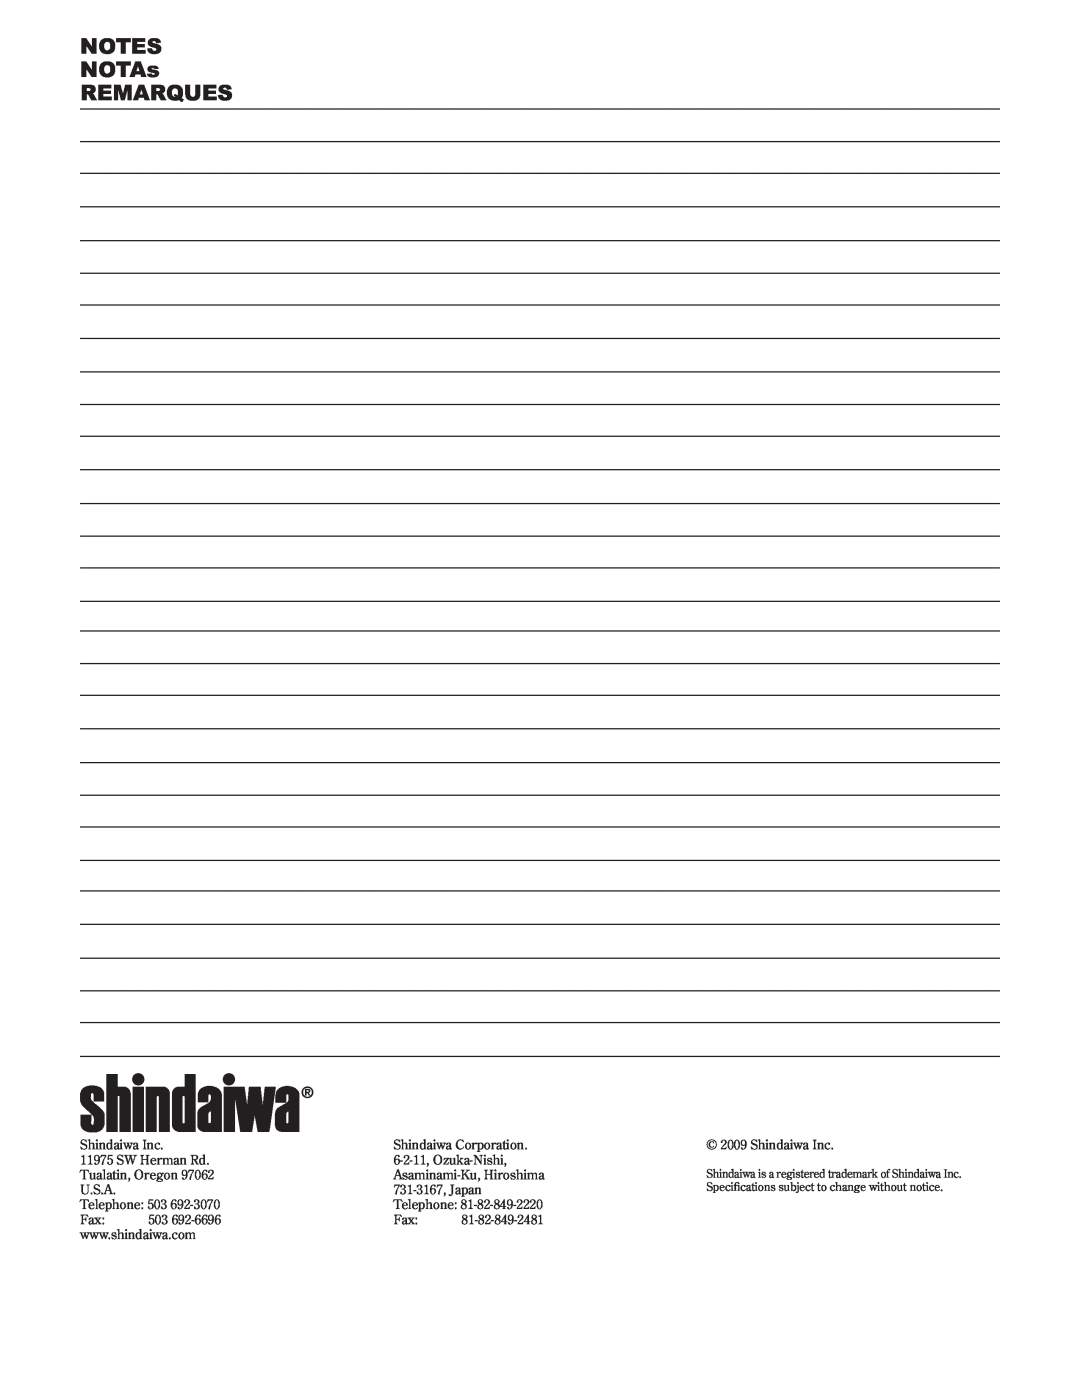 Shindaiwa 89302, C242/EVC manual NOTAs REMARQUES, Asaminami-Ku, Hiroshima, Telephone 